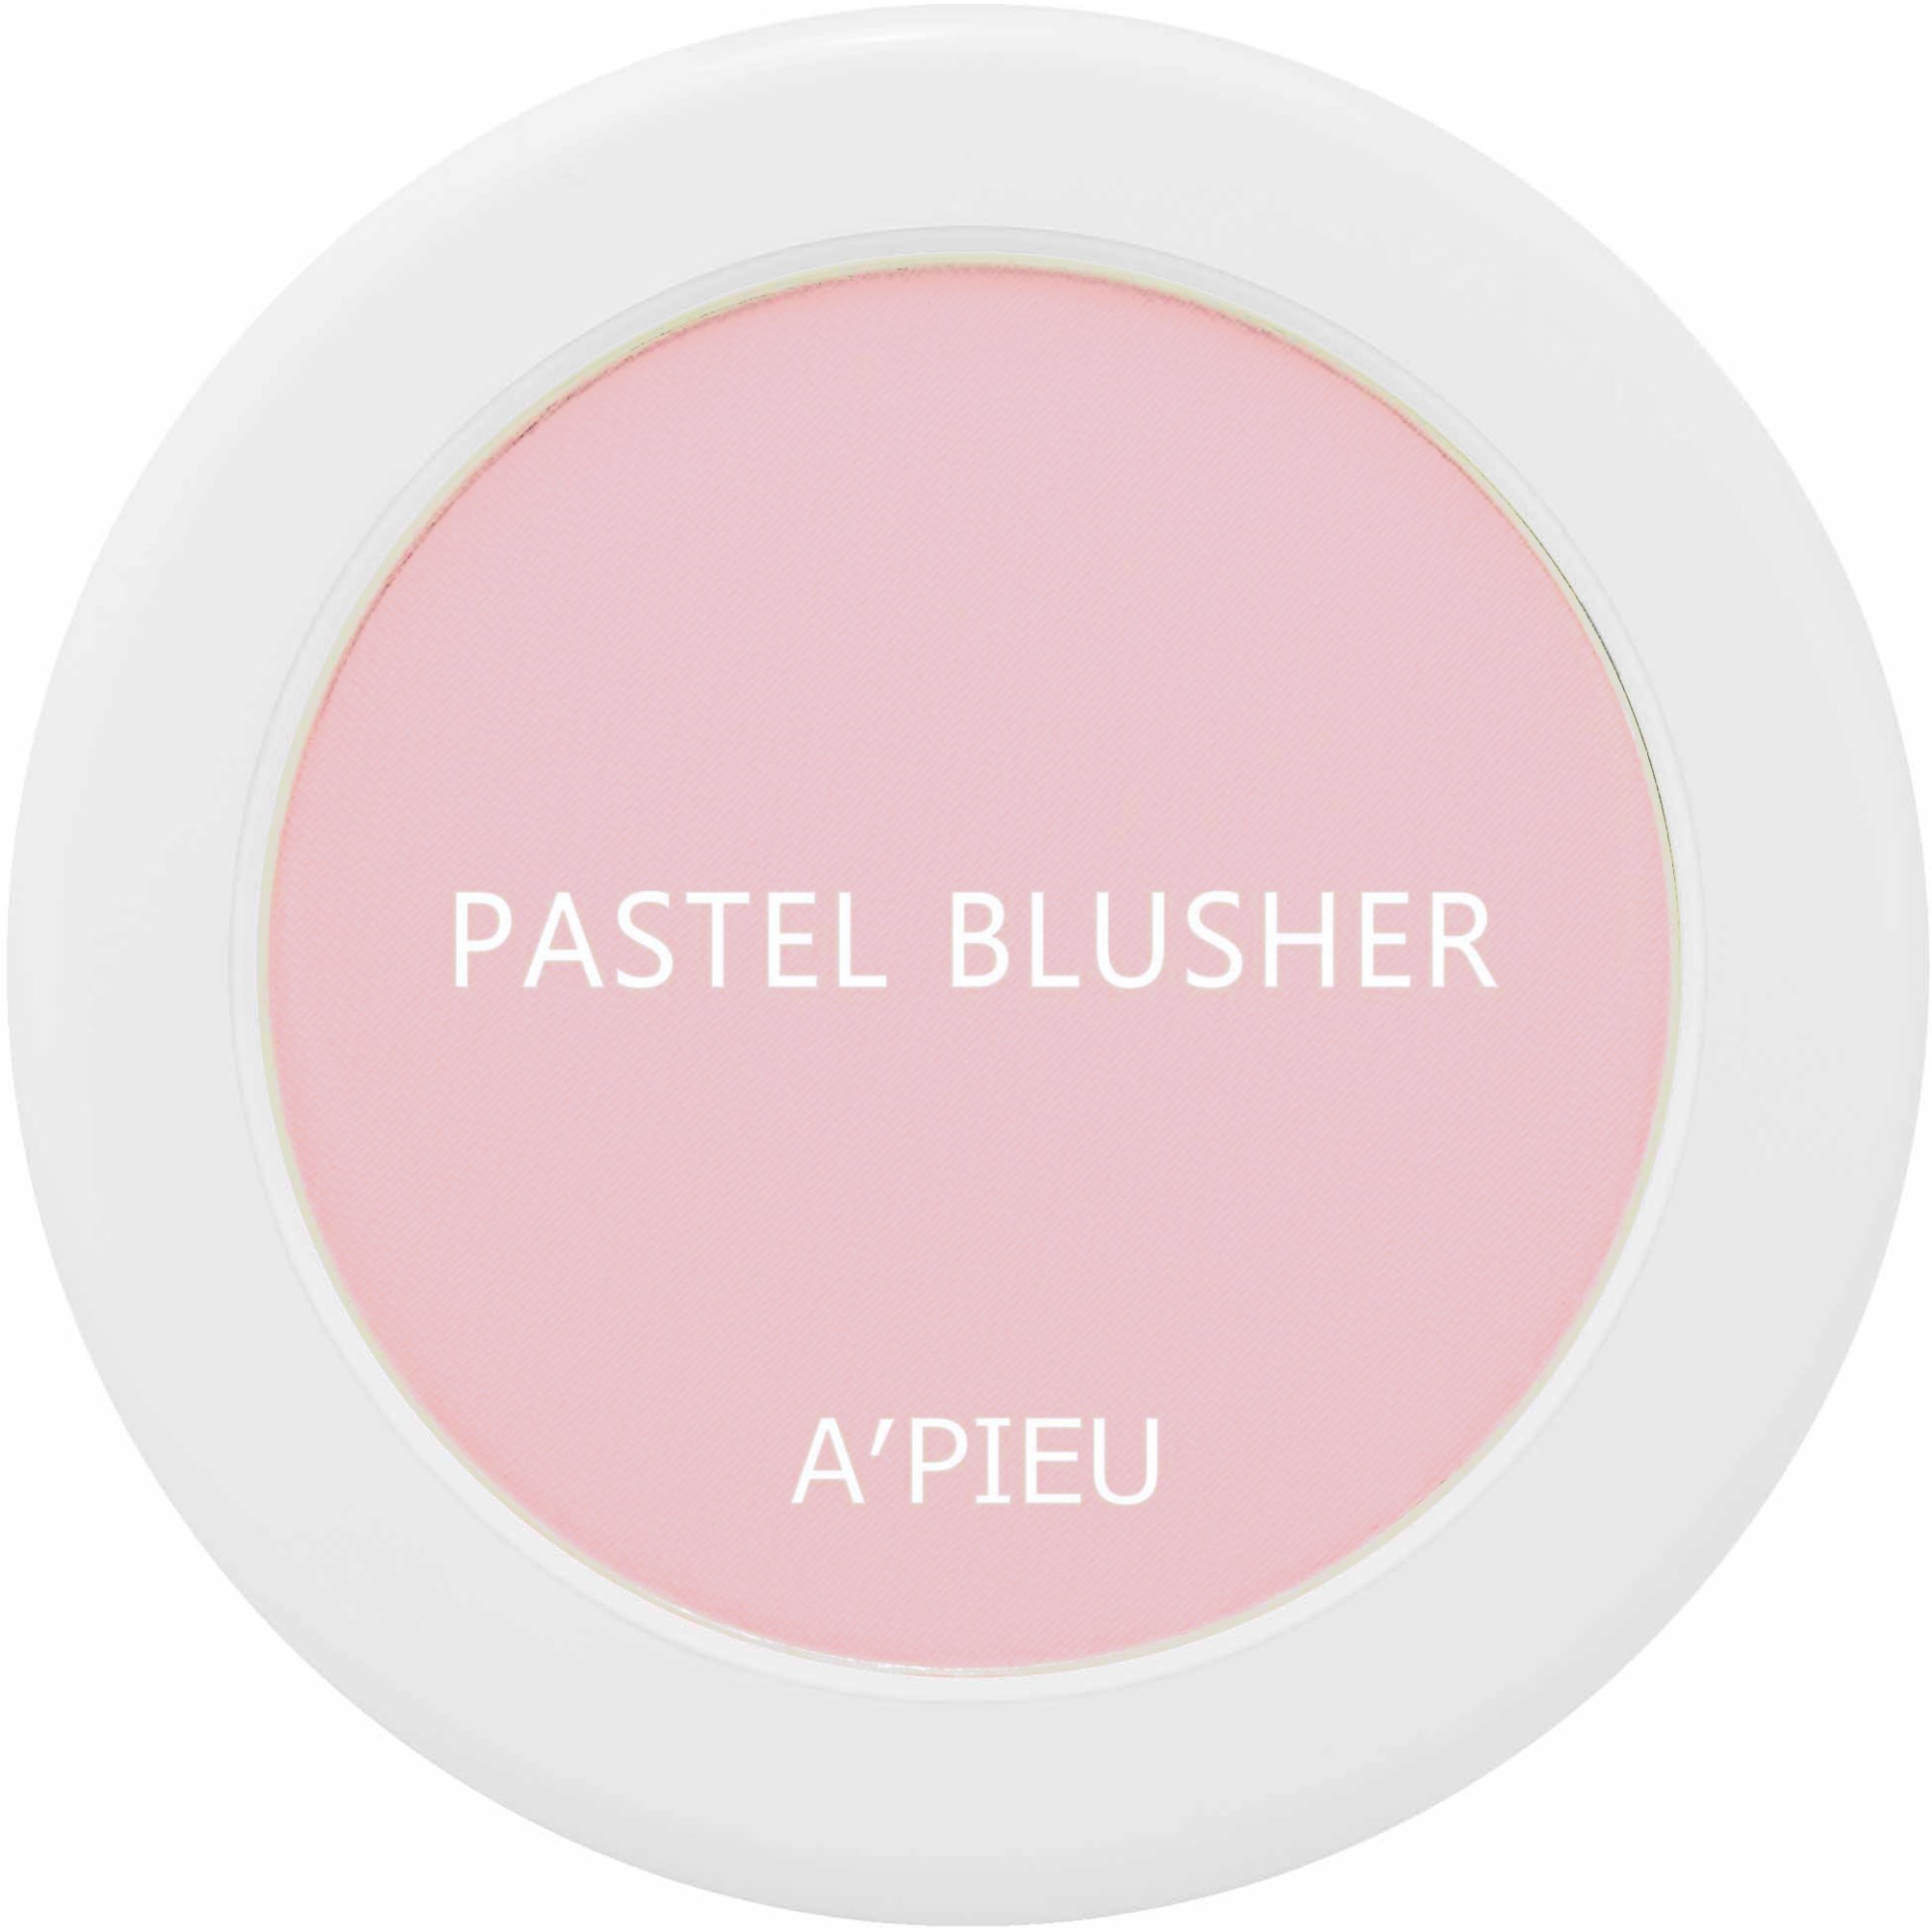 A'Pieu Pastel Blusher Vl01